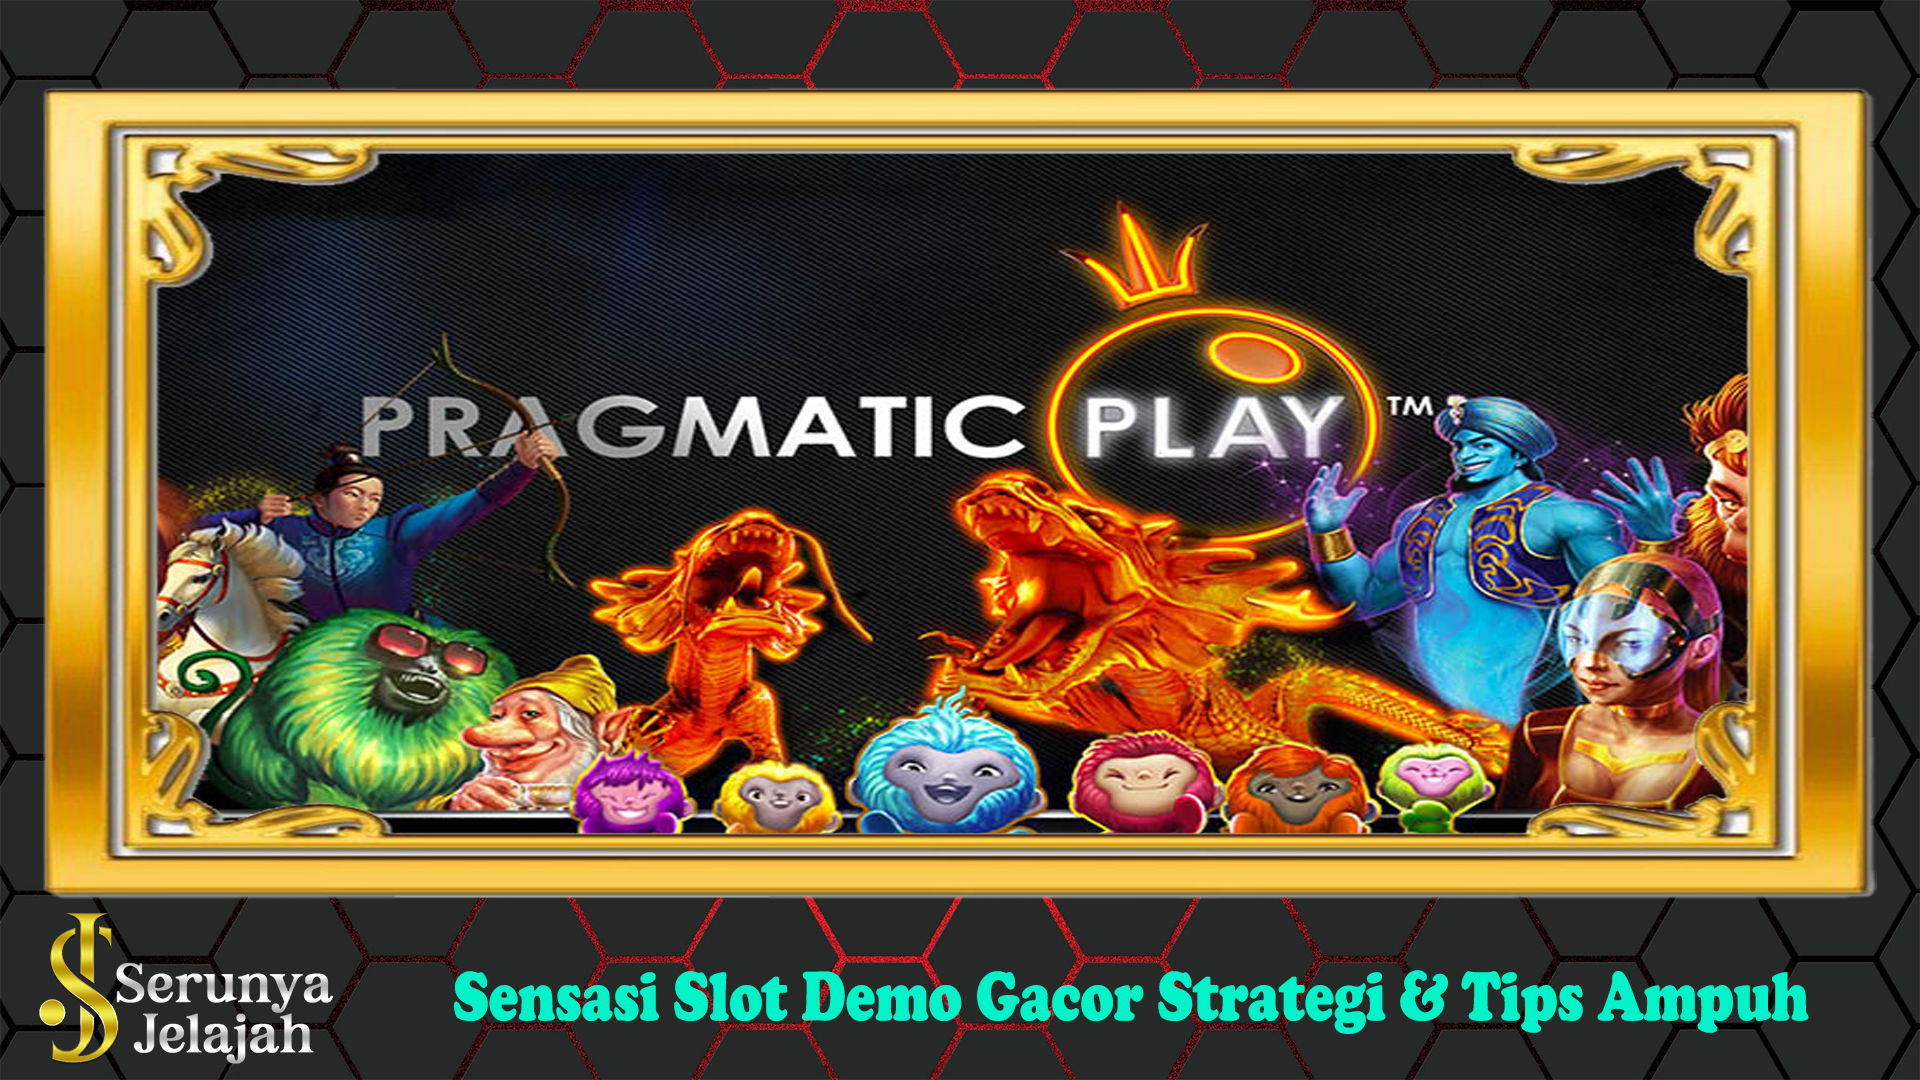 Sensasi Slot Demo Gacor Strategi & Tips Ampuh